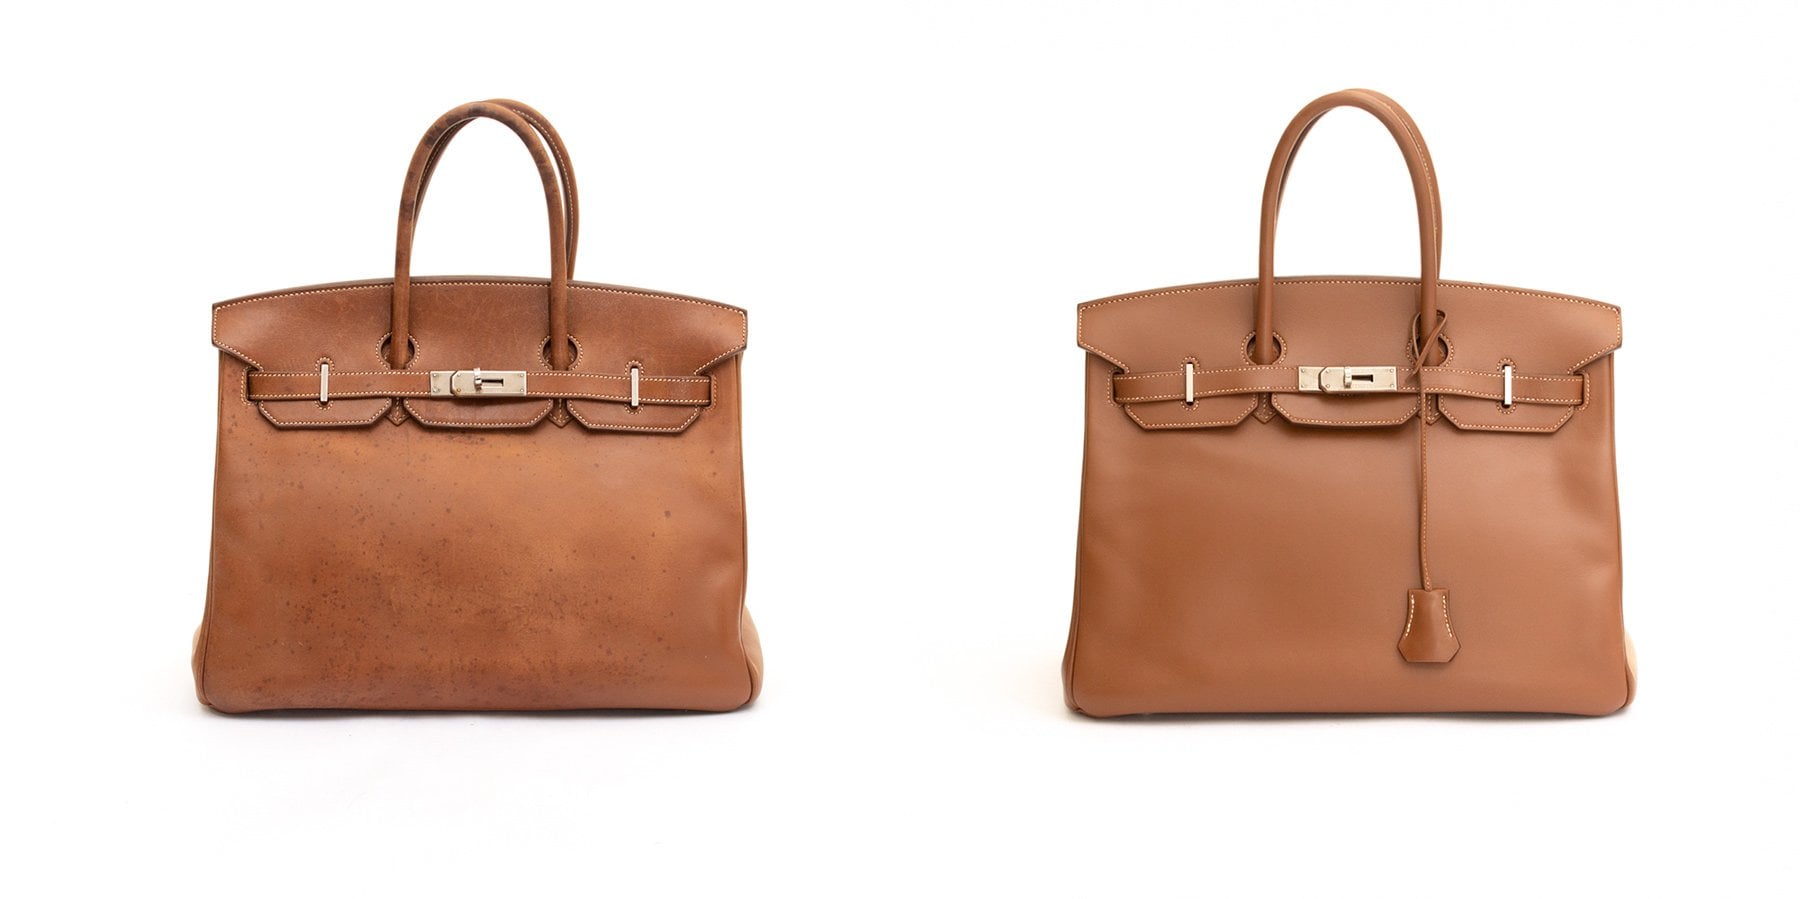 Buy Handbags & Purses - Designer Brands For Sale At Auction | Invaluable